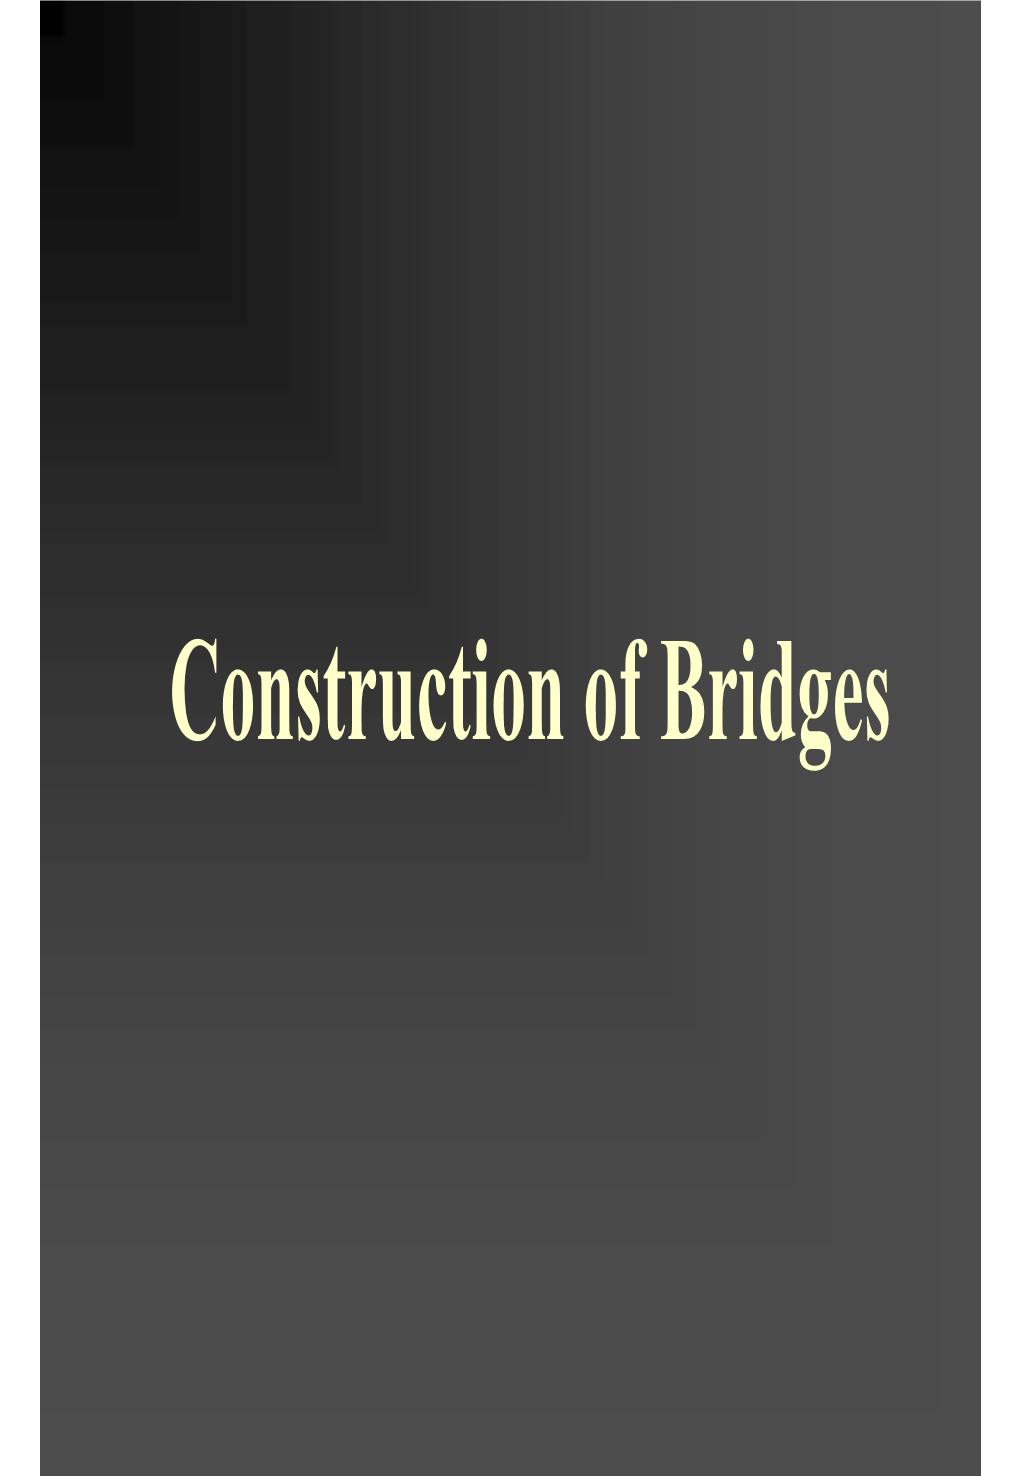 Construction of Bridges Materials Suitable for the Construction of Long-Span Bridges 1